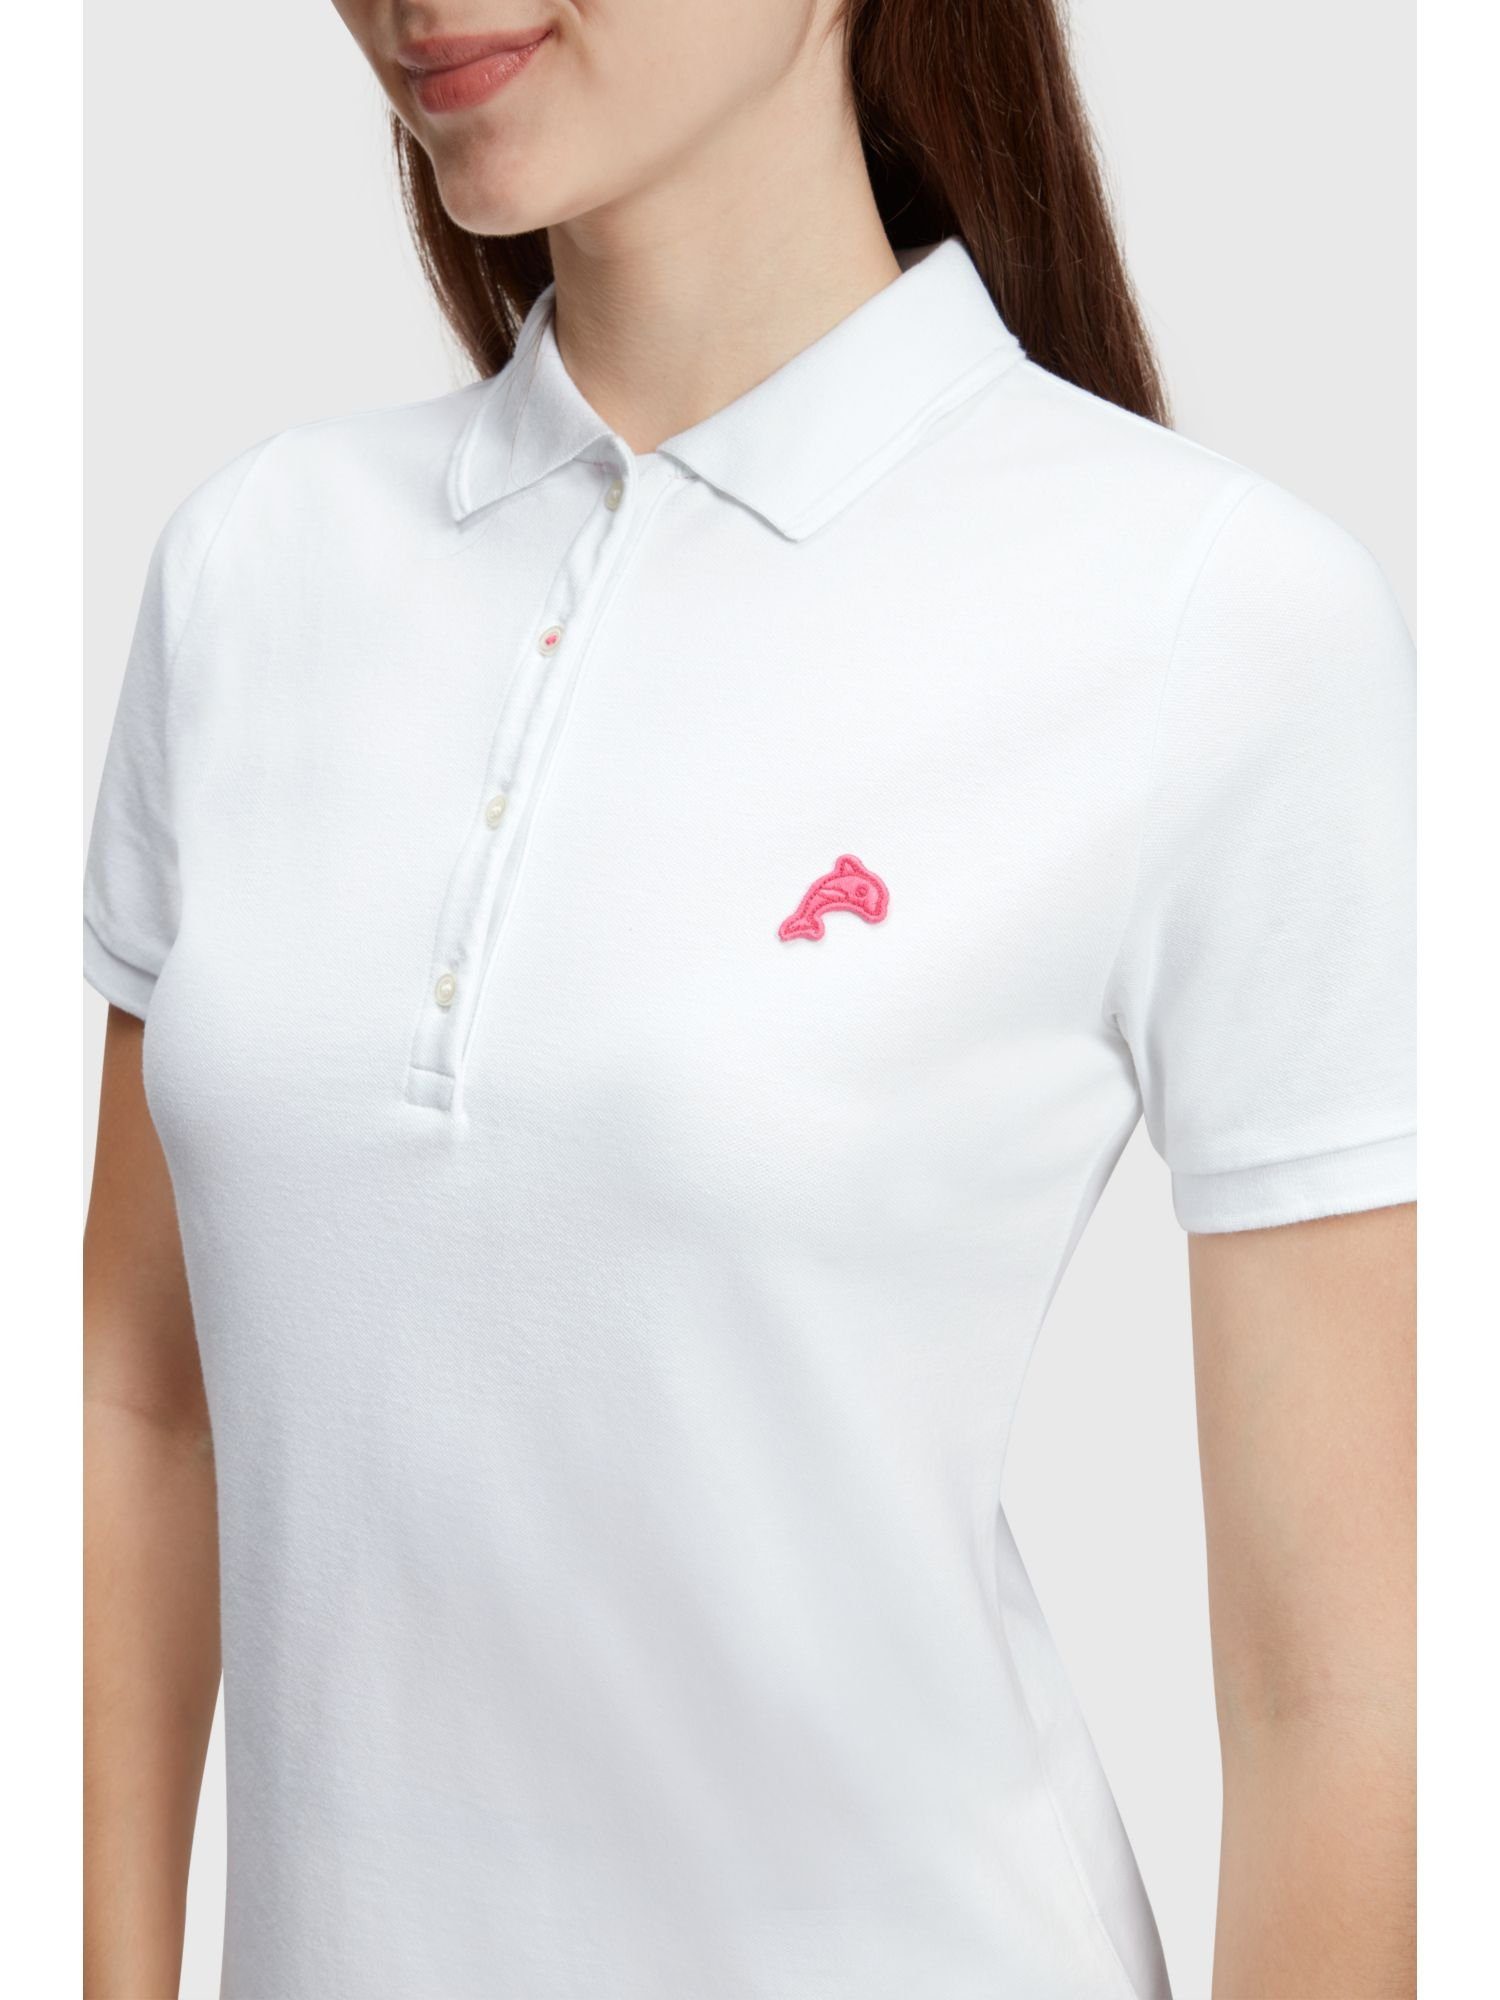 Esprit Poloshirt Klassisches Tennis-Poloshirt mit Dolphin-Batch WHITE | Poloshirts